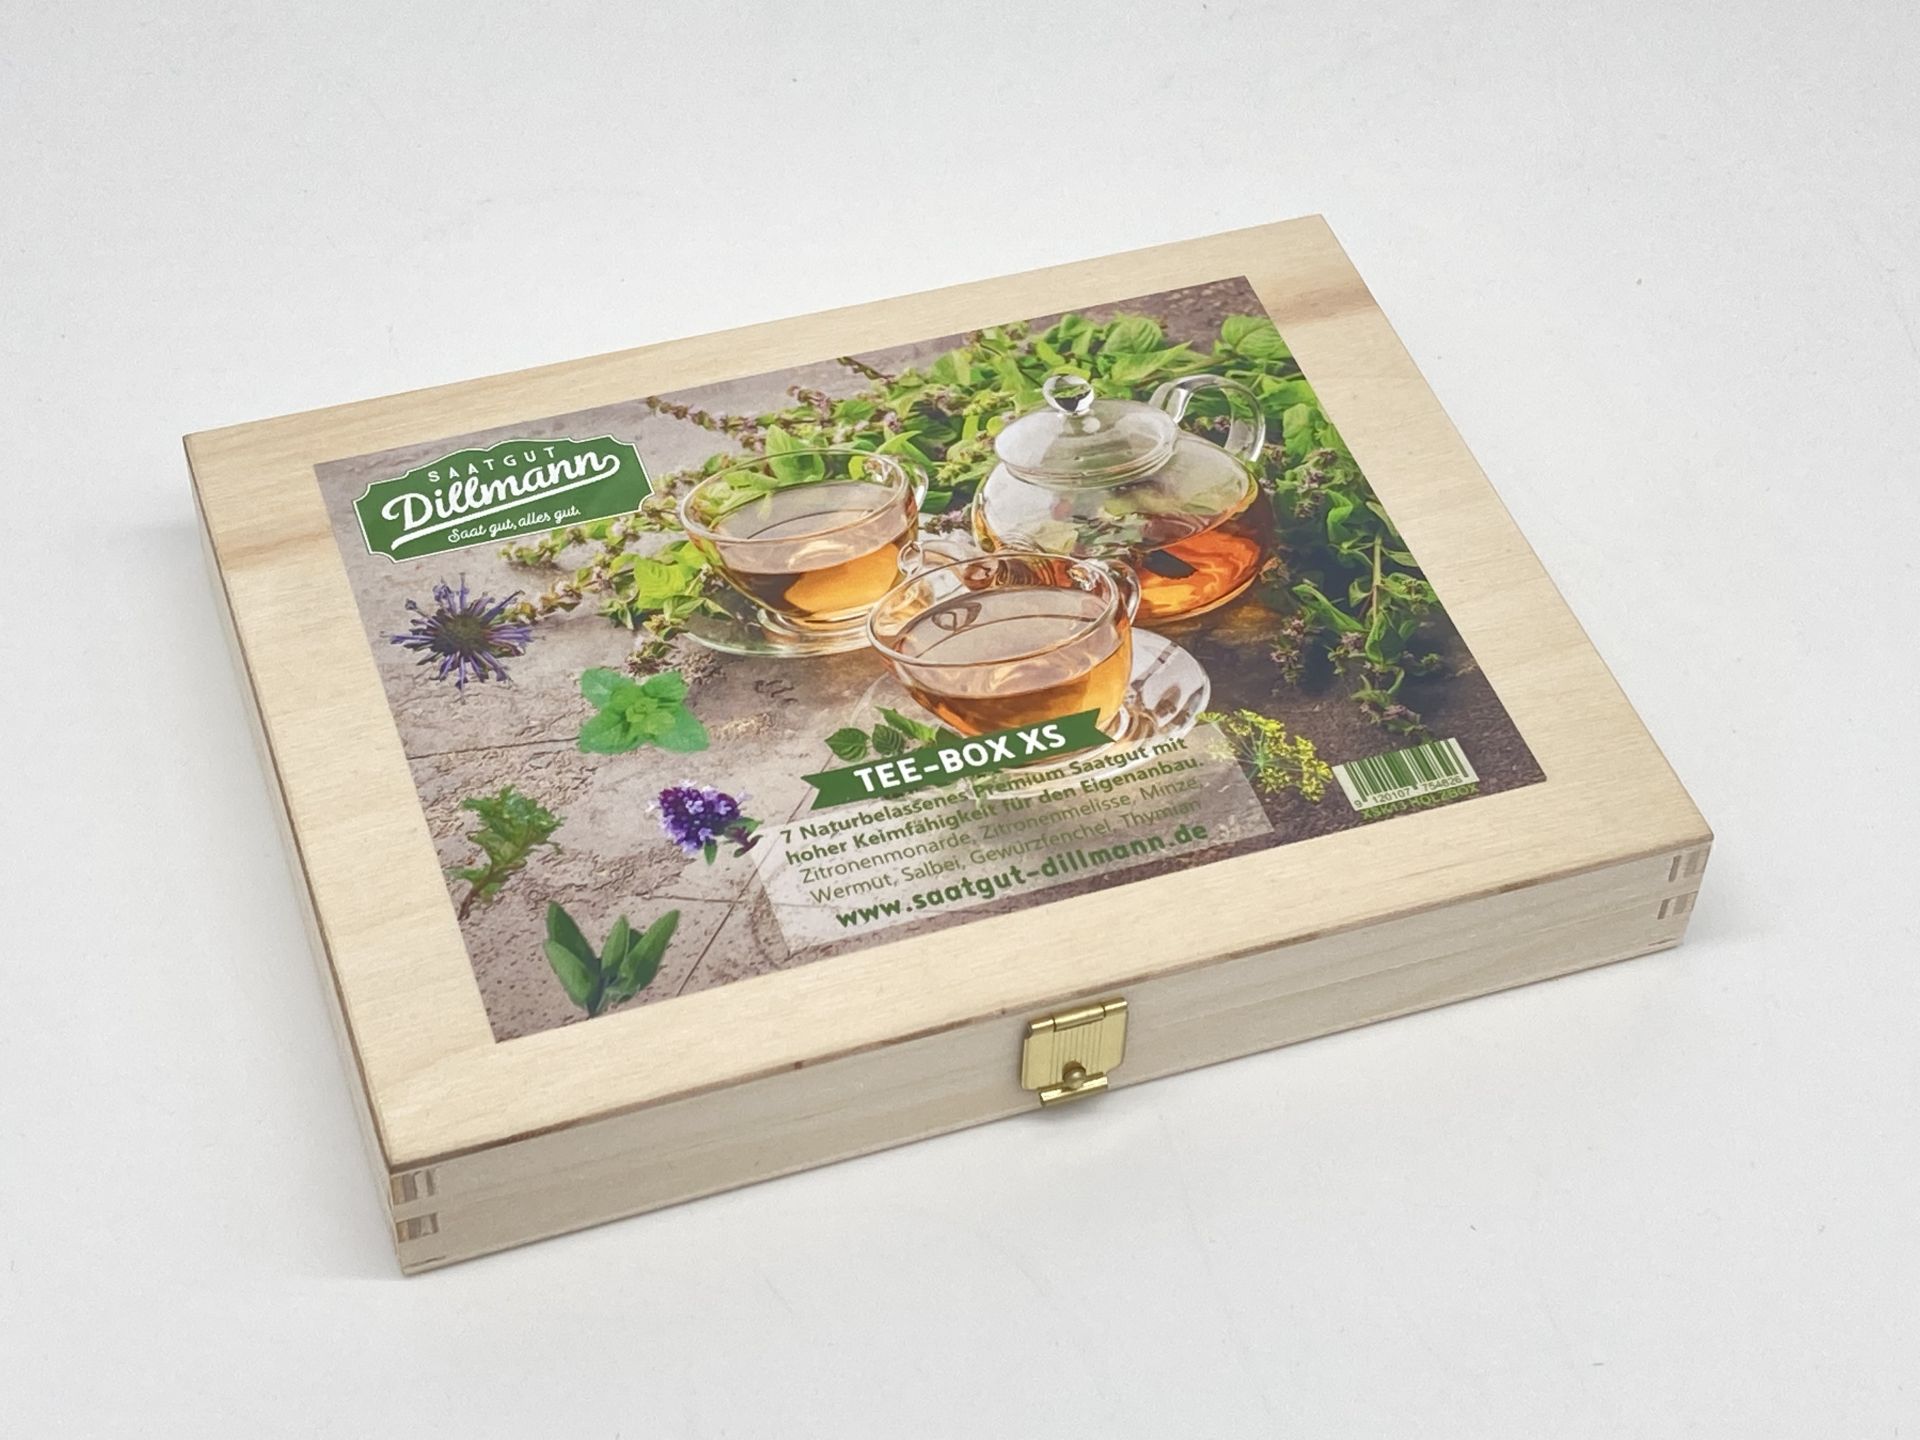 Saatgut-Box XS aus Holz – Teesorten